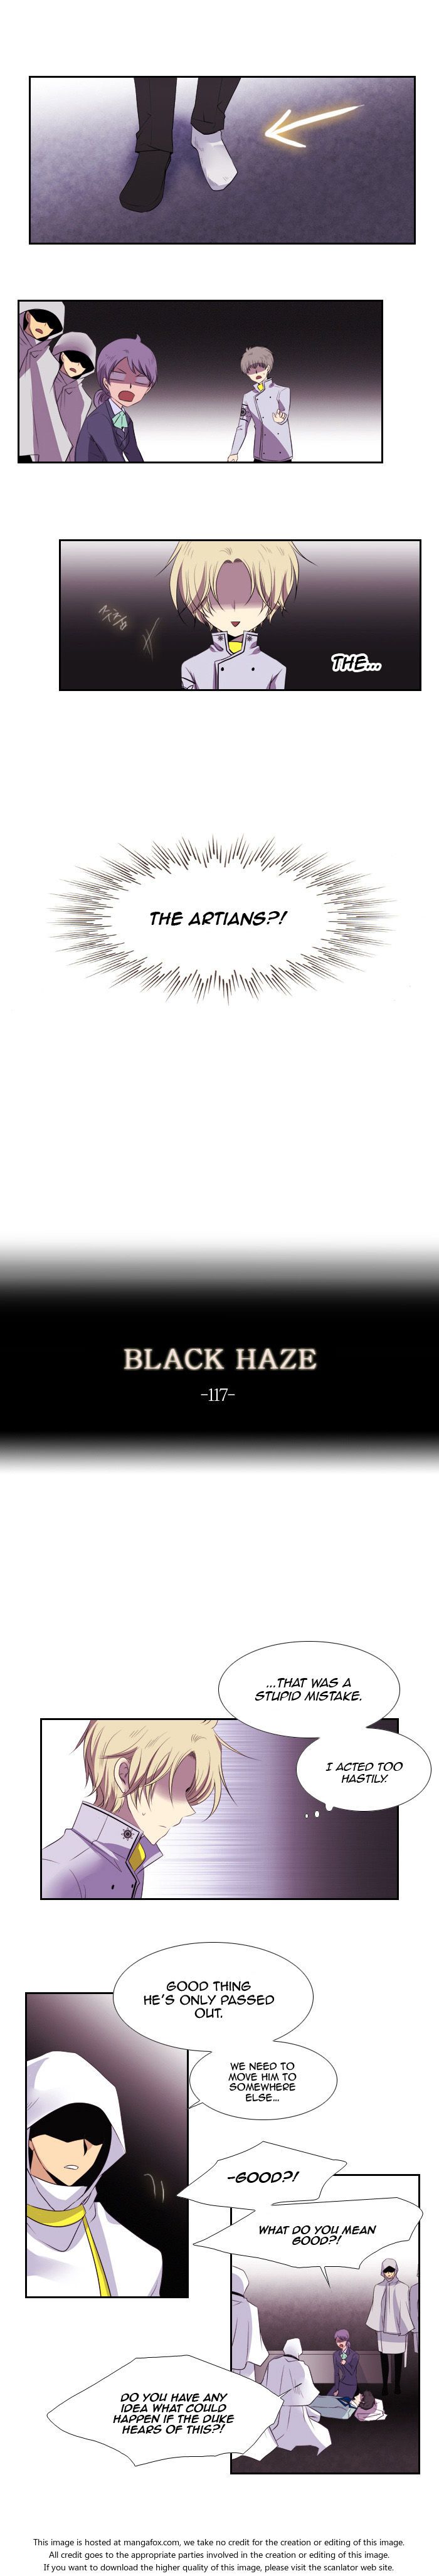 Black Haze Chapter 117 page 4